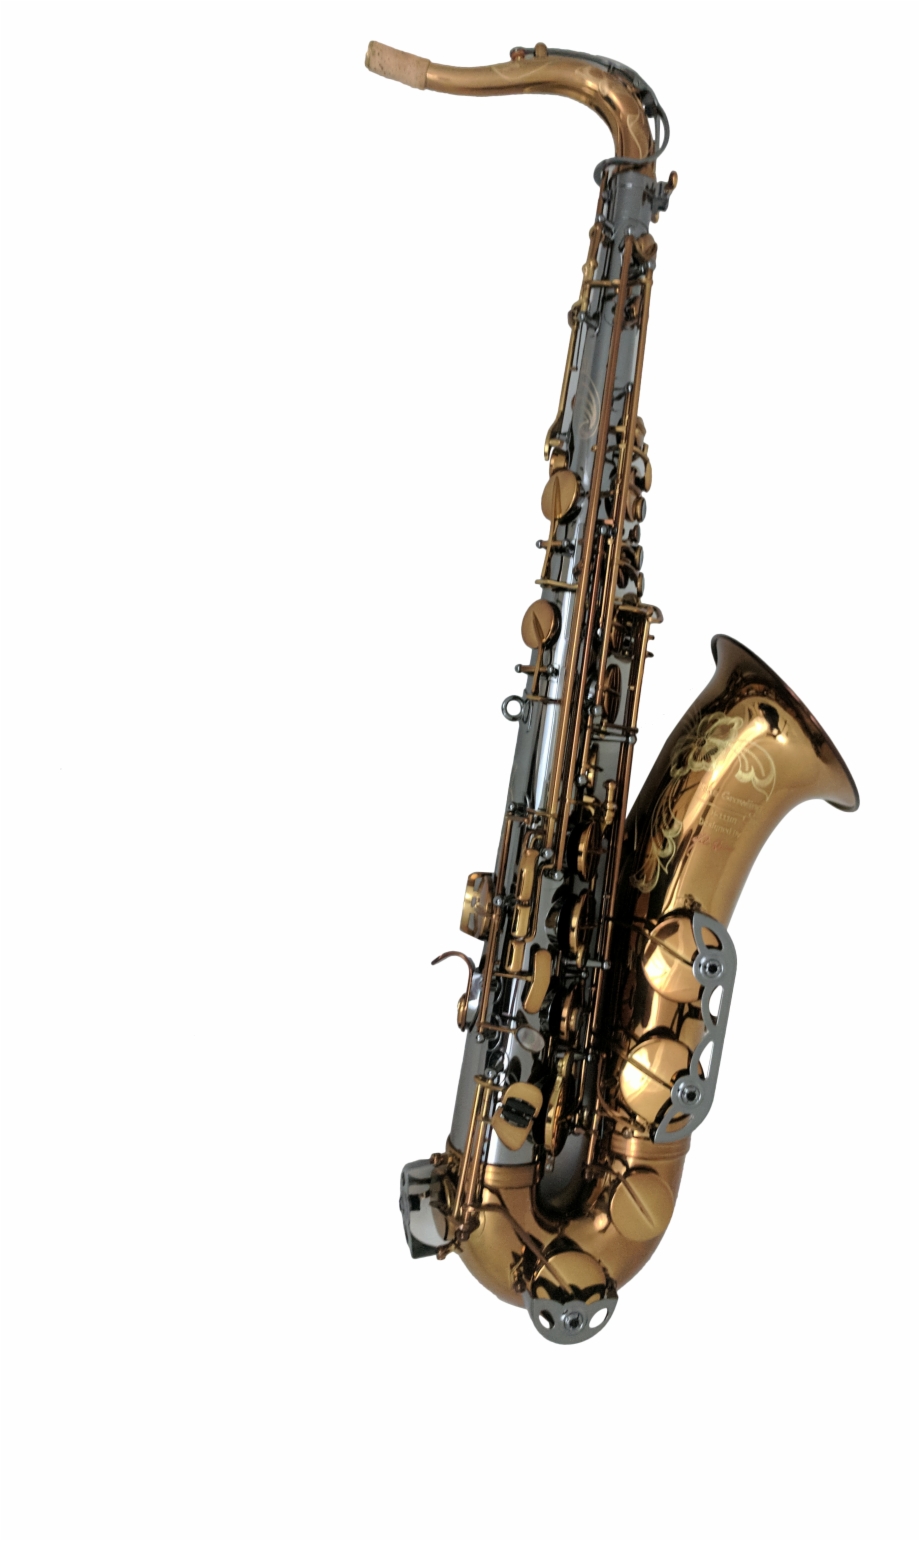 The Growling Sax Baritone Saxophone